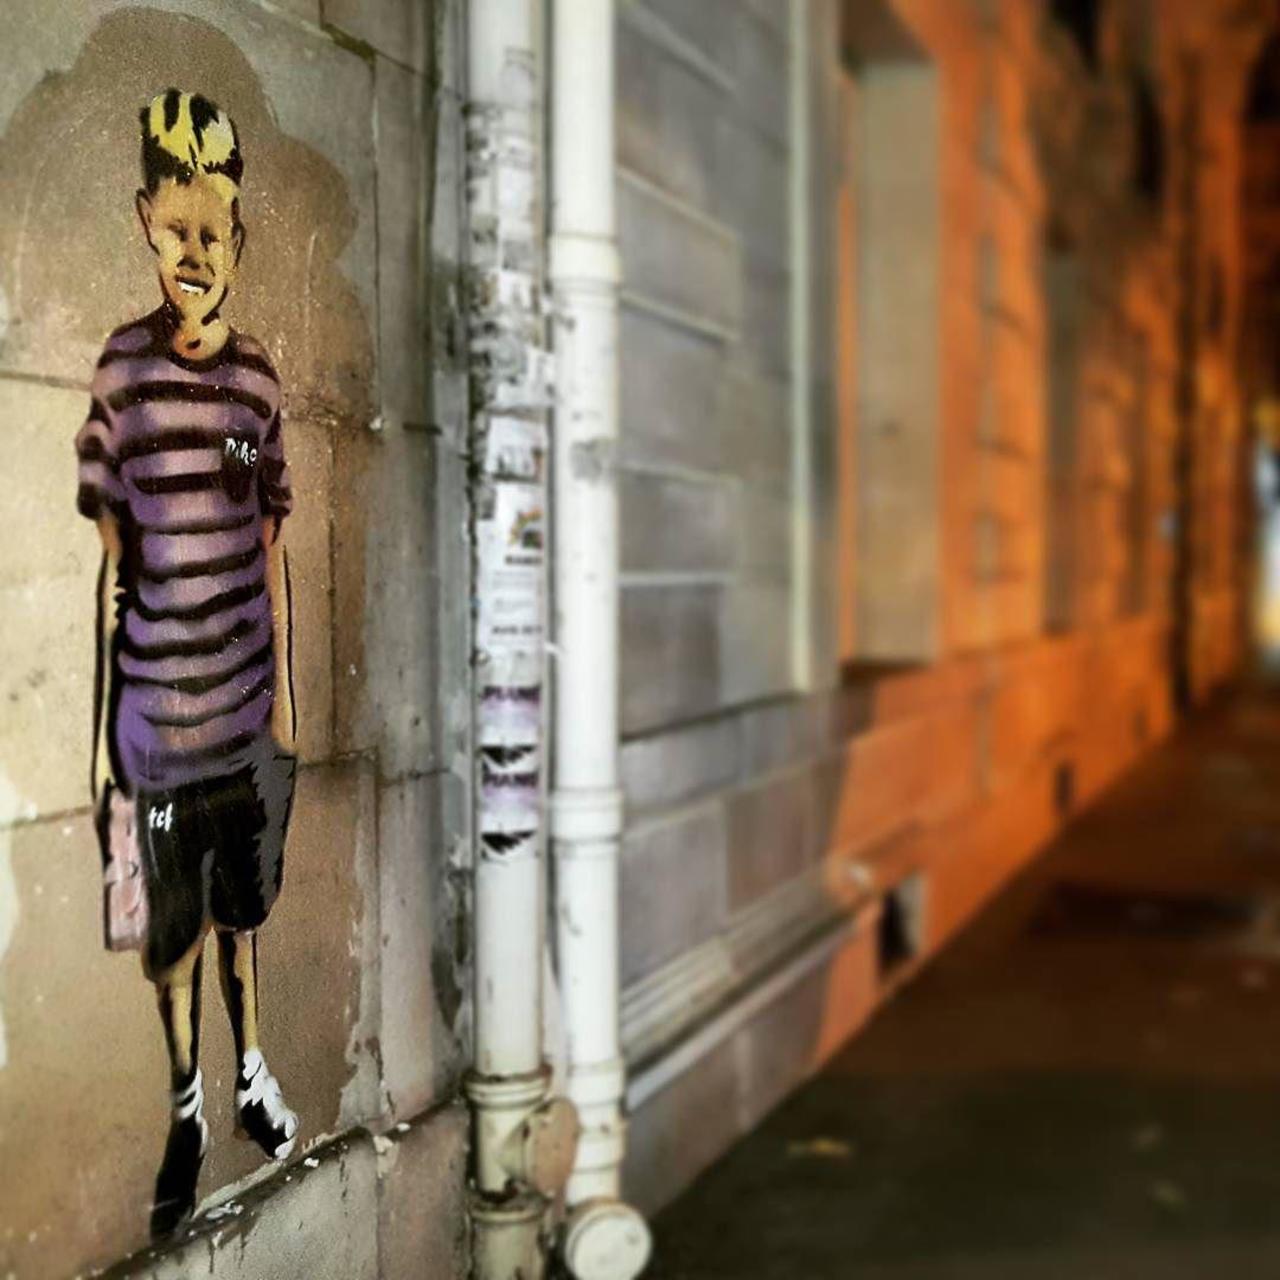 #Paris #graffiti photo by @the169 http://ift.tt/1LgEP0Q #StreetArt http://t.co/ytvdGTaCjB